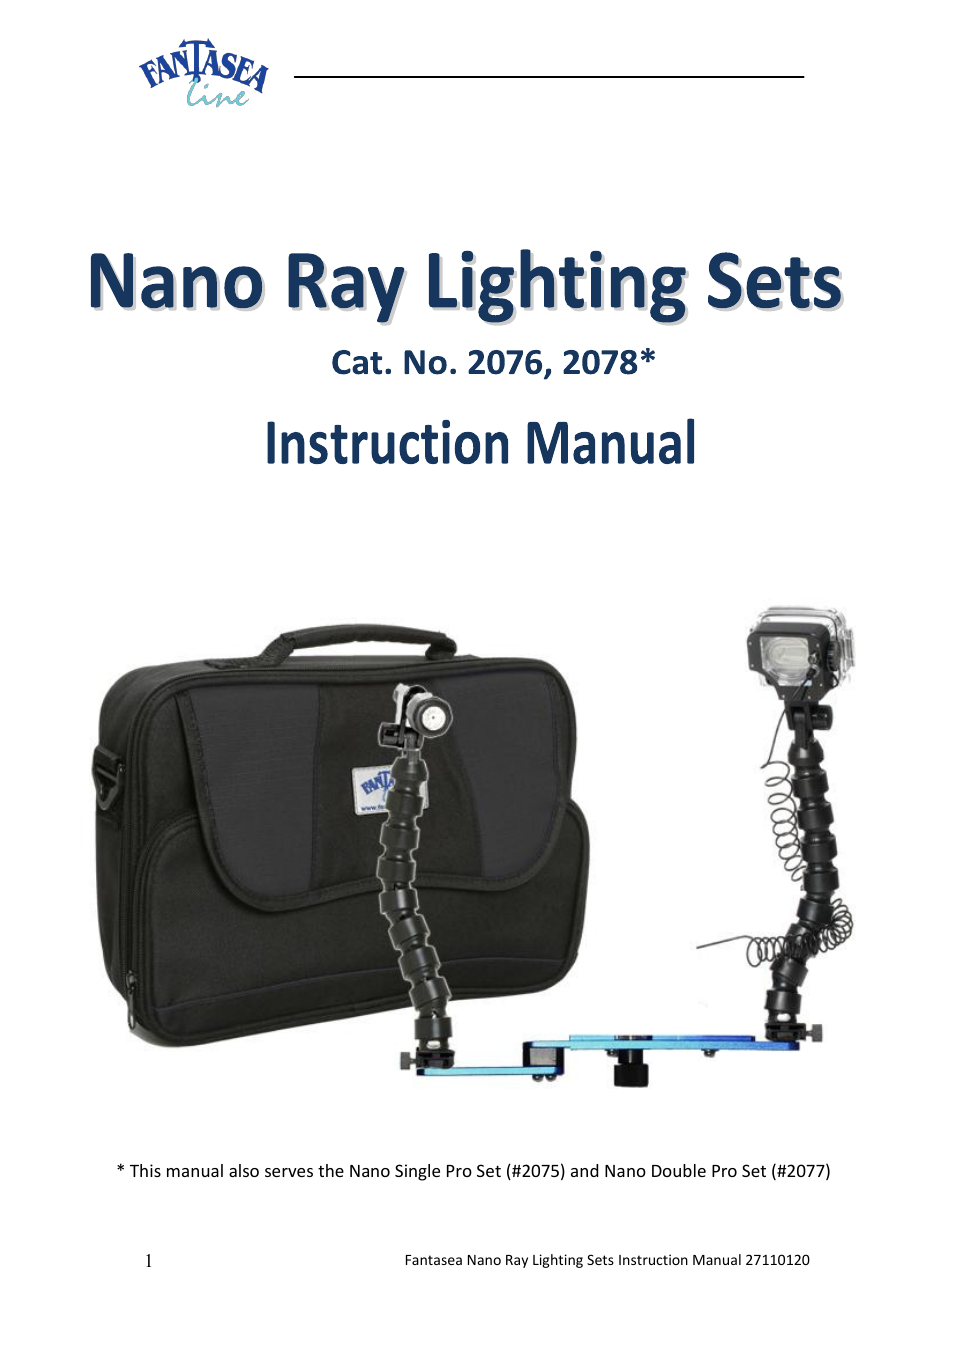 Nano Flash Lighting Set